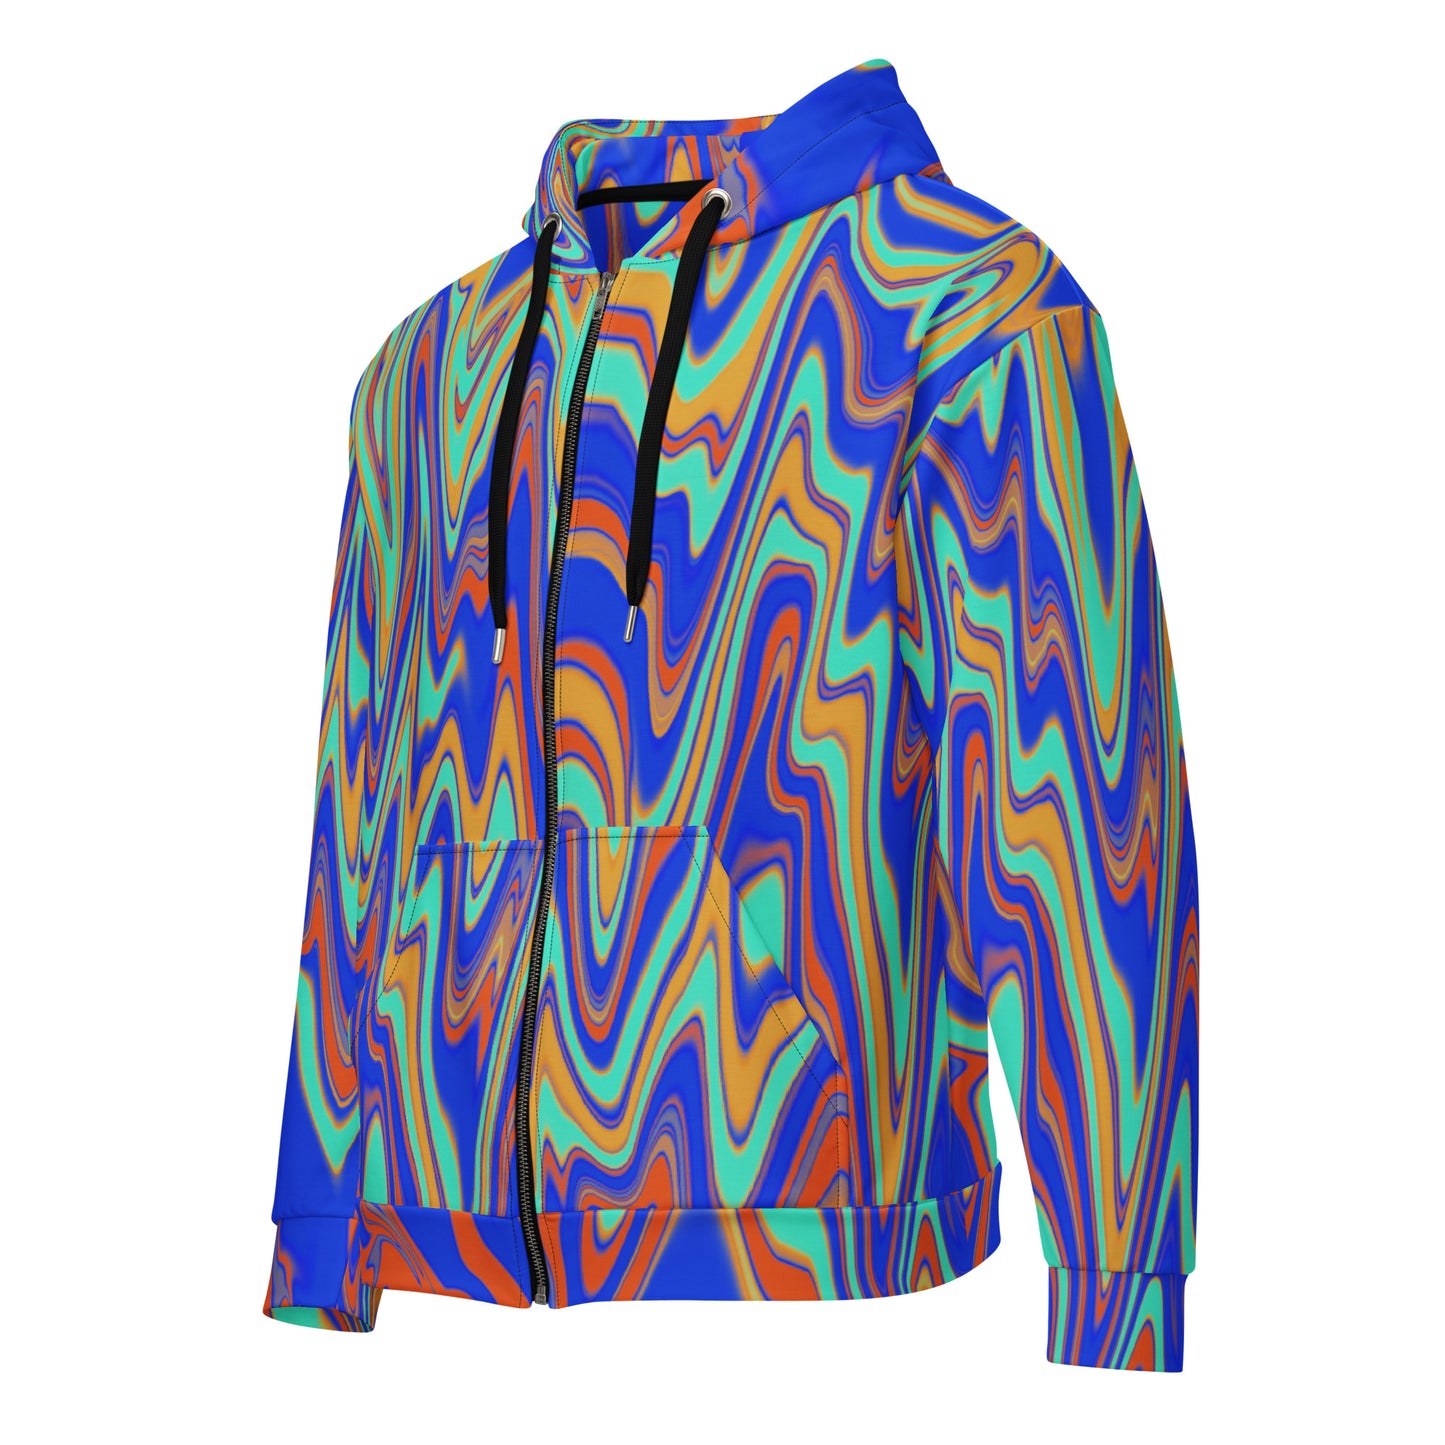 Euphorian Vision zip hoodie